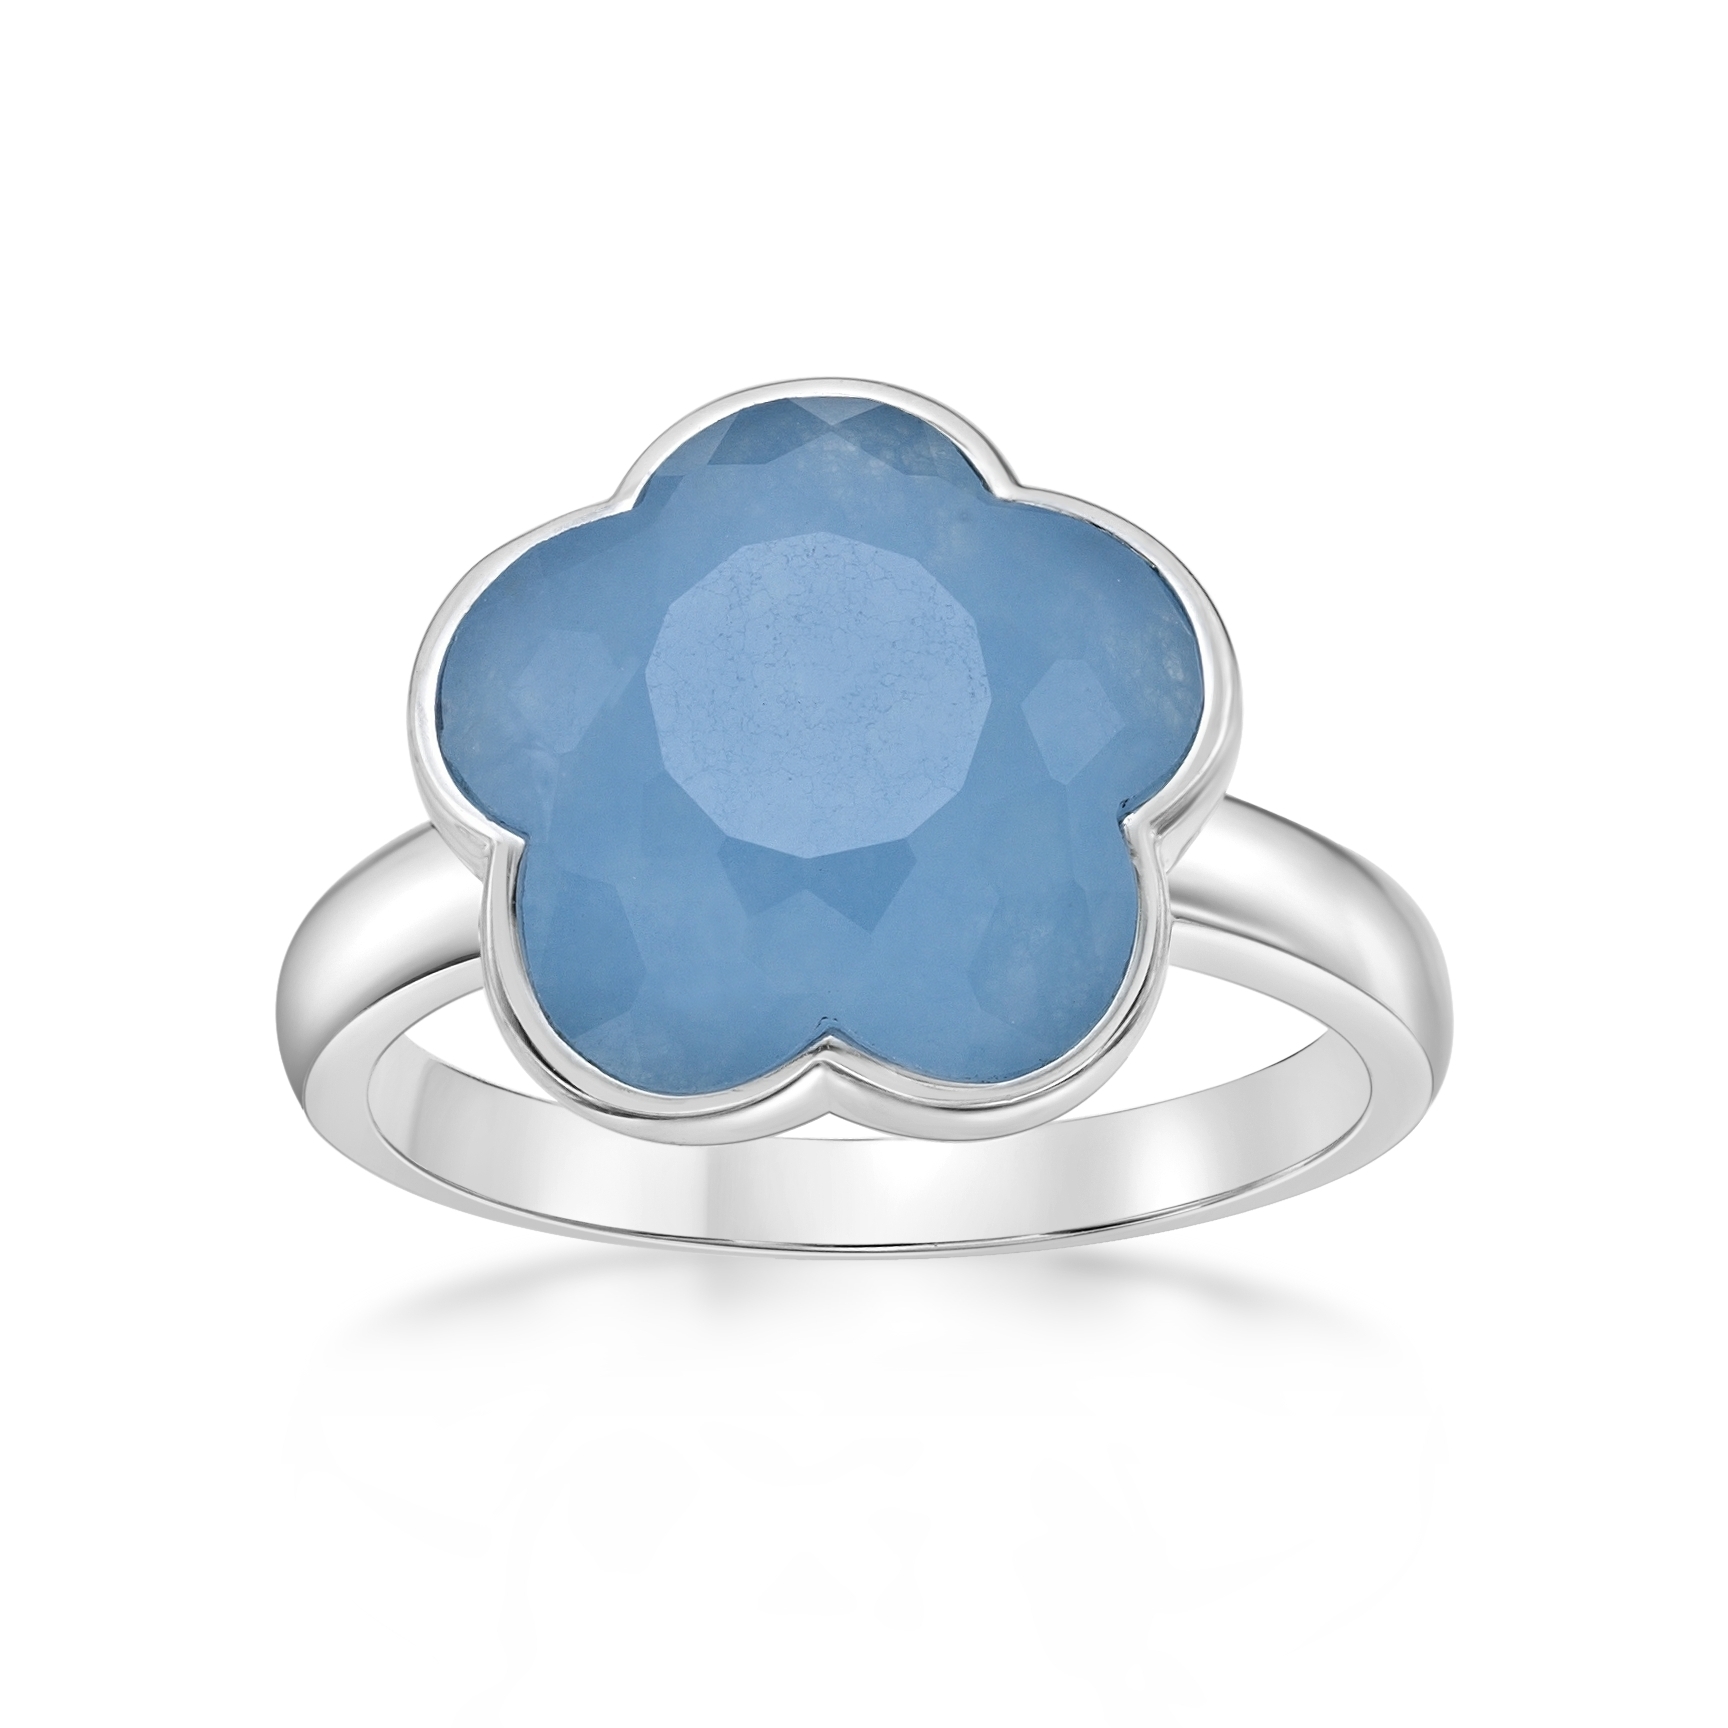 Lavari Jewelers Women’s Blue Quartz Five Petal Flower Ring, 925 Sterling Silver, Size 8